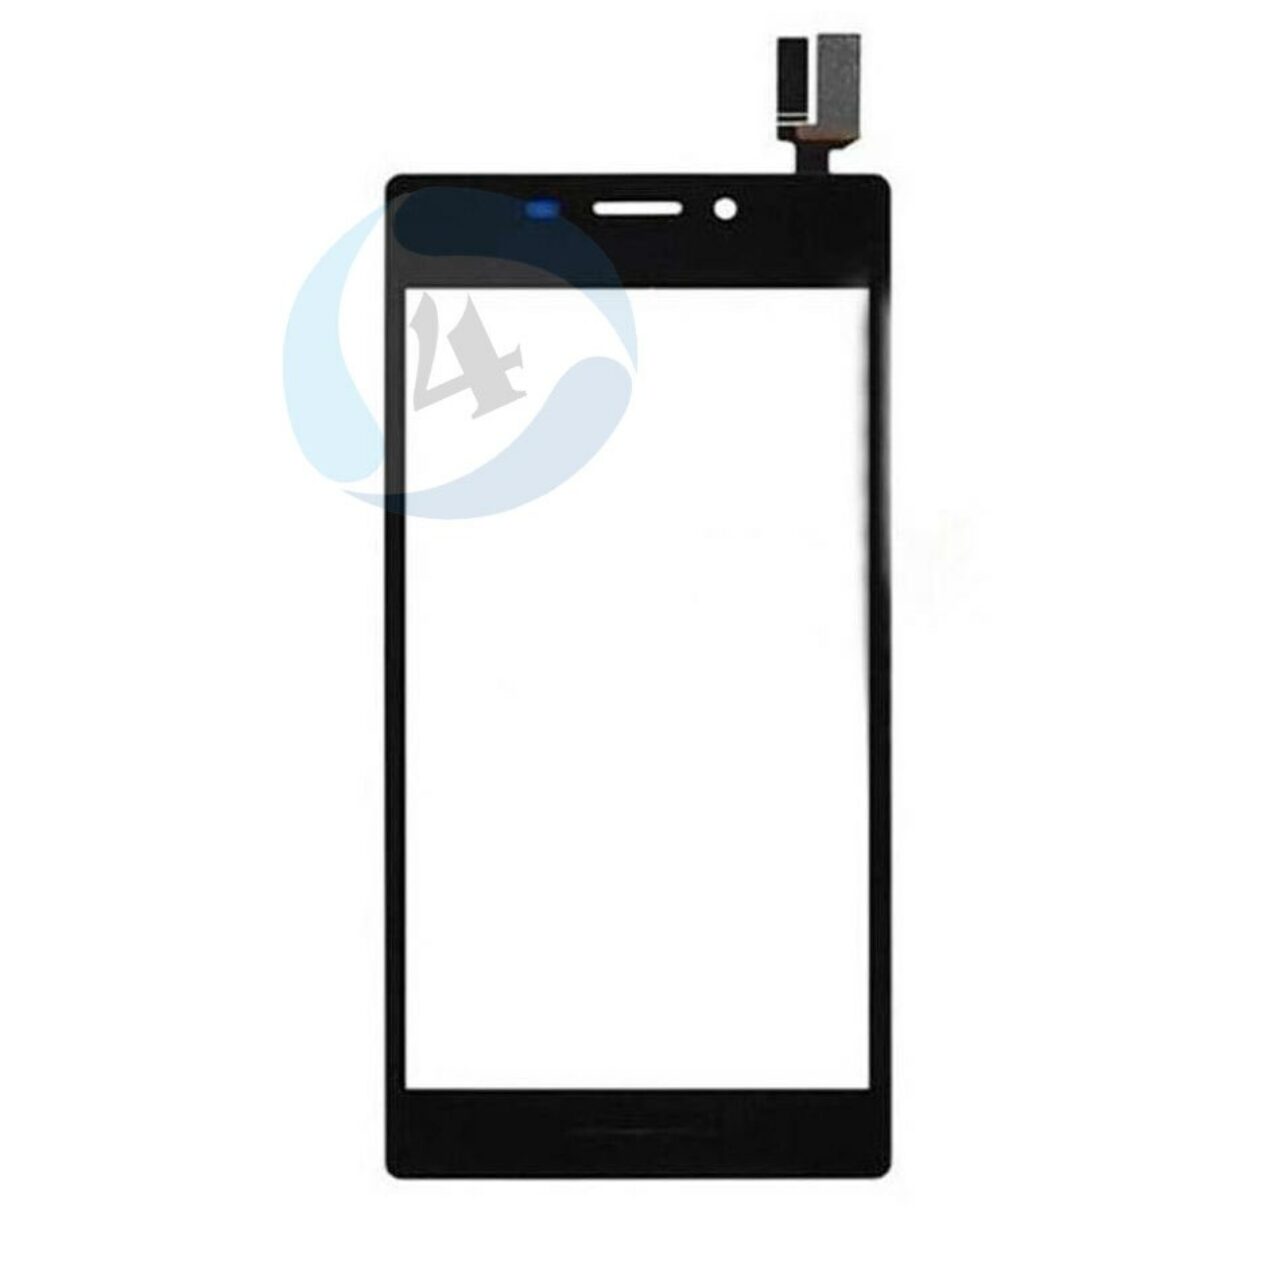 Sony Xperia M2 D2303 Touchscreen Digitizer Black